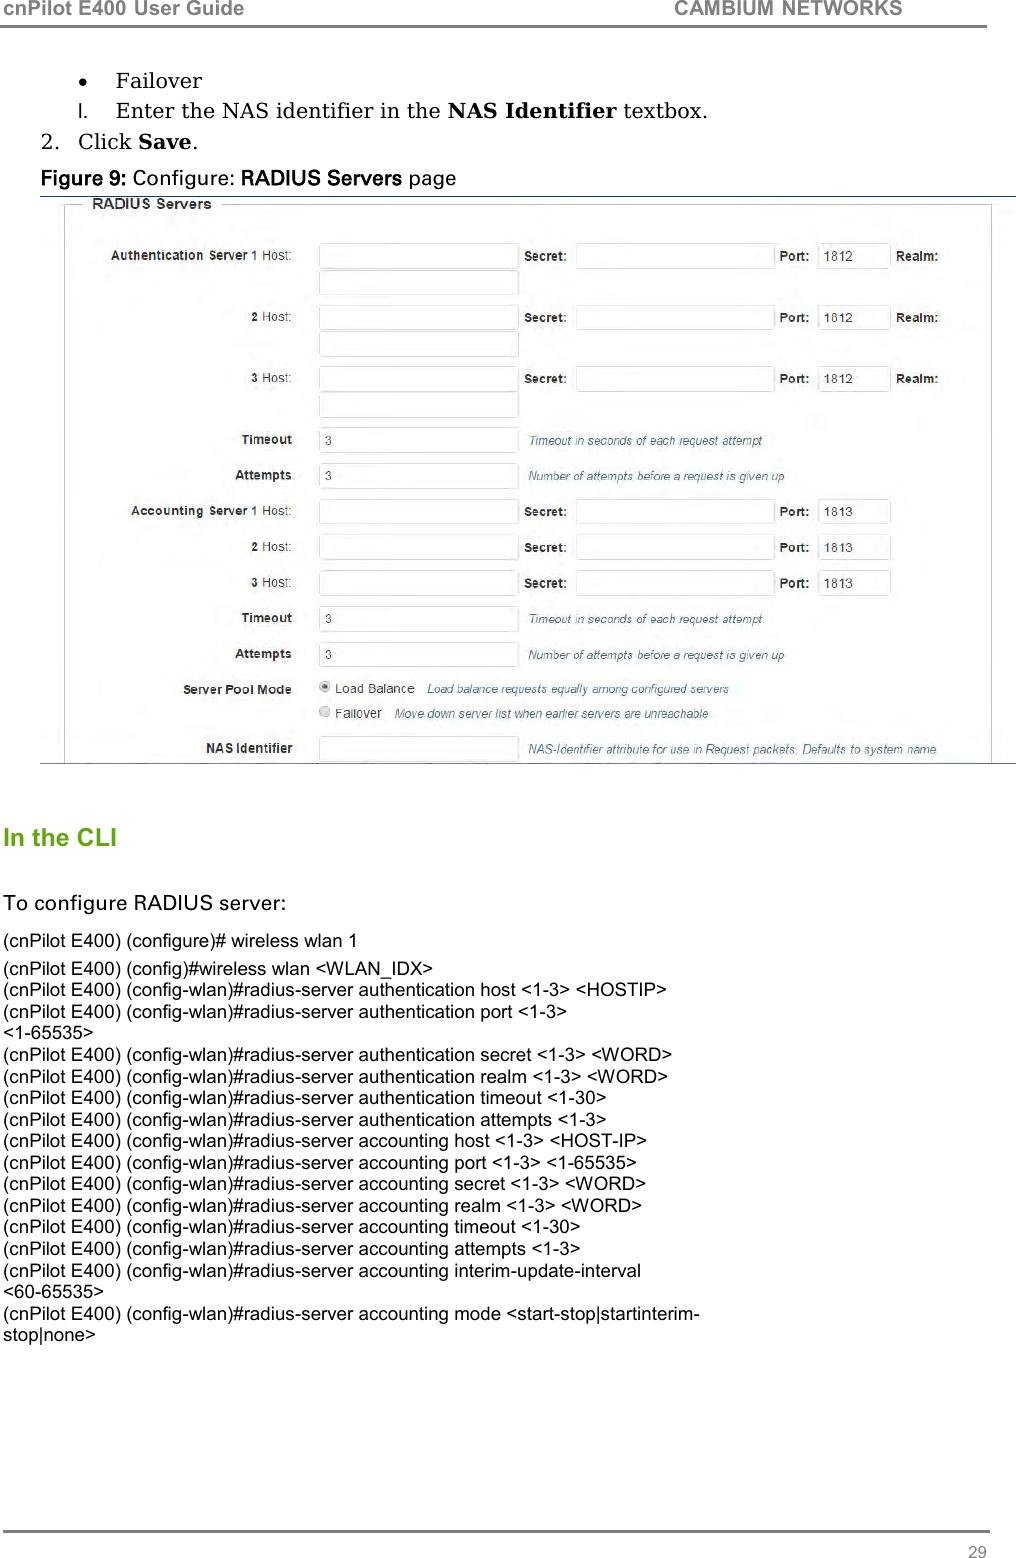 cnPilot E400 User Guide           CAMBIUM NETWORKS   29  Failover l. Enter the NAS identifier in the NAS Identifier textbox. 2. Click Save. Figure 9: Configure: RADIUS Servers page    In the CLI  To configure RADIUS server: (cnPilot E400) (configure)# wireless wlan 1 (cnPilot E400) (config)#wireless wlan &lt;WLAN_IDX&gt; (cnPilot E400) (config-wlan)#radius-server authentication host &lt;1-3&gt; &lt;HOSTIP&gt; (cnPilot E400) (config-wlan)#radius-server authentication port &lt;1-3&gt; &lt;1-65535&gt; (cnPilot E400) (config-wlan)#radius-server authentication secret &lt;1-3&gt; &lt;WORD&gt; (cnPilot E400) (config-wlan)#radius-server authentication realm &lt;1-3&gt; &lt;WORD&gt; (cnPilot E400) (config-wlan)#radius-server authentication timeout &lt;1-30&gt; (cnPilot E400) (config-wlan)#radius-server authentication attempts &lt;1-3&gt; (cnPilot E400) (config-wlan)#radius-server accounting host &lt;1-3&gt; &lt;HOST-IP&gt; (cnPilot E400) (config-wlan)#radius-server accounting port &lt;1-3&gt; &lt;1-65535&gt; (cnPilot E400) (config-wlan)#radius-server accounting secret &lt;1-3&gt; &lt;WORD&gt; (cnPilot E400) (config-wlan)#radius-server accounting realm &lt;1-3&gt; &lt;WORD&gt; (cnPilot E400) (config-wlan)#radius-server accounting timeout &lt;1-30&gt; (cnPilot E400) (config-wlan)#radius-server accounting attempts &lt;1-3&gt; (cnPilot E400) (config-wlan)#radius-server accounting interim-update-interval &lt;60-65535&gt; (cnPilot E400) (config-wlan)#radius-server accounting mode &lt;start-stop|startinterim- stop|none&gt;   